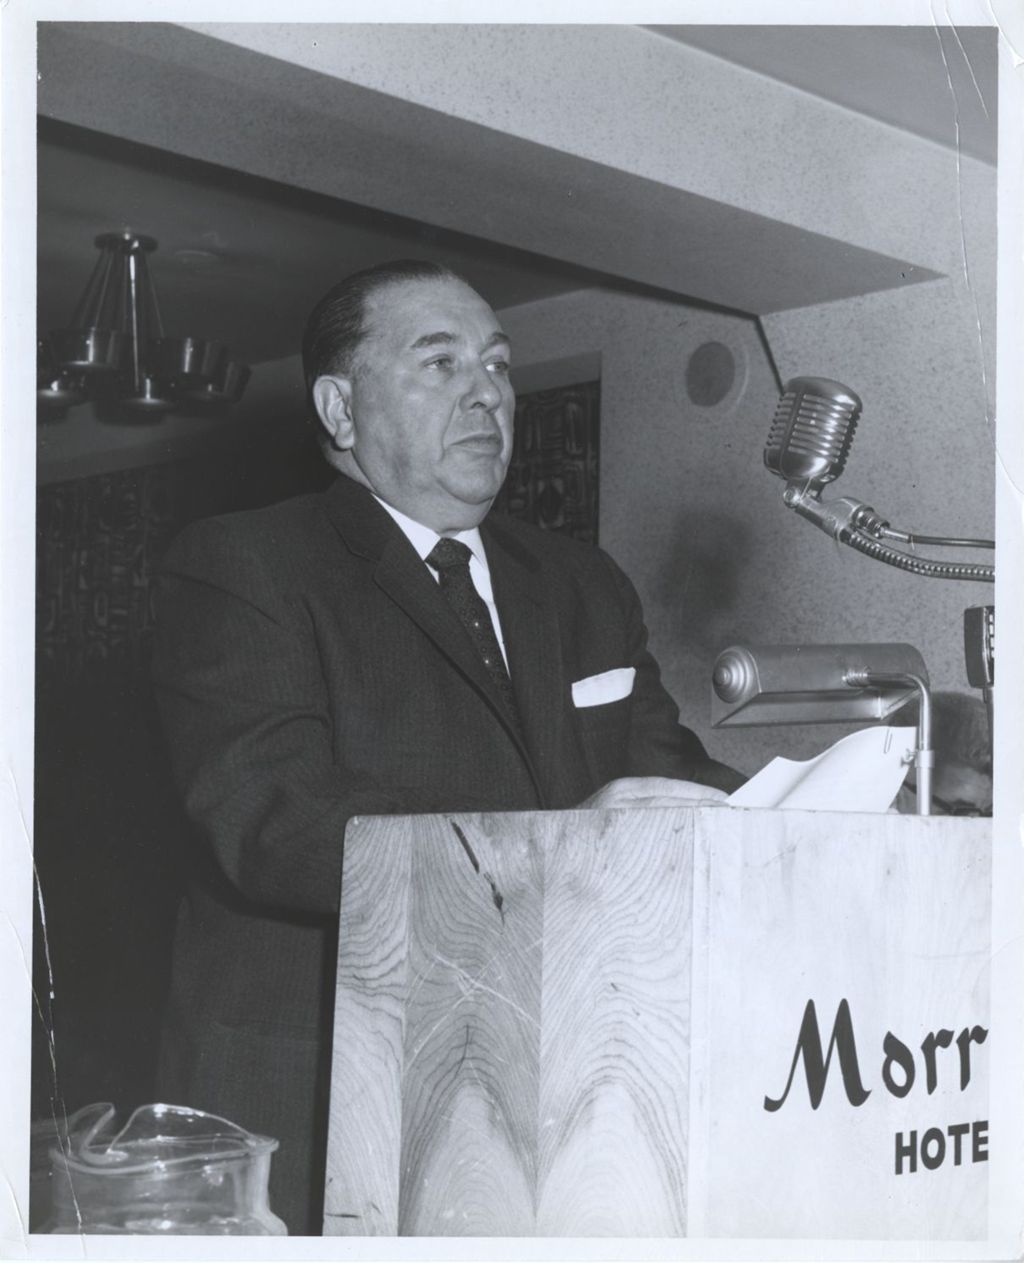 Richard J. Daley speaking at a podium